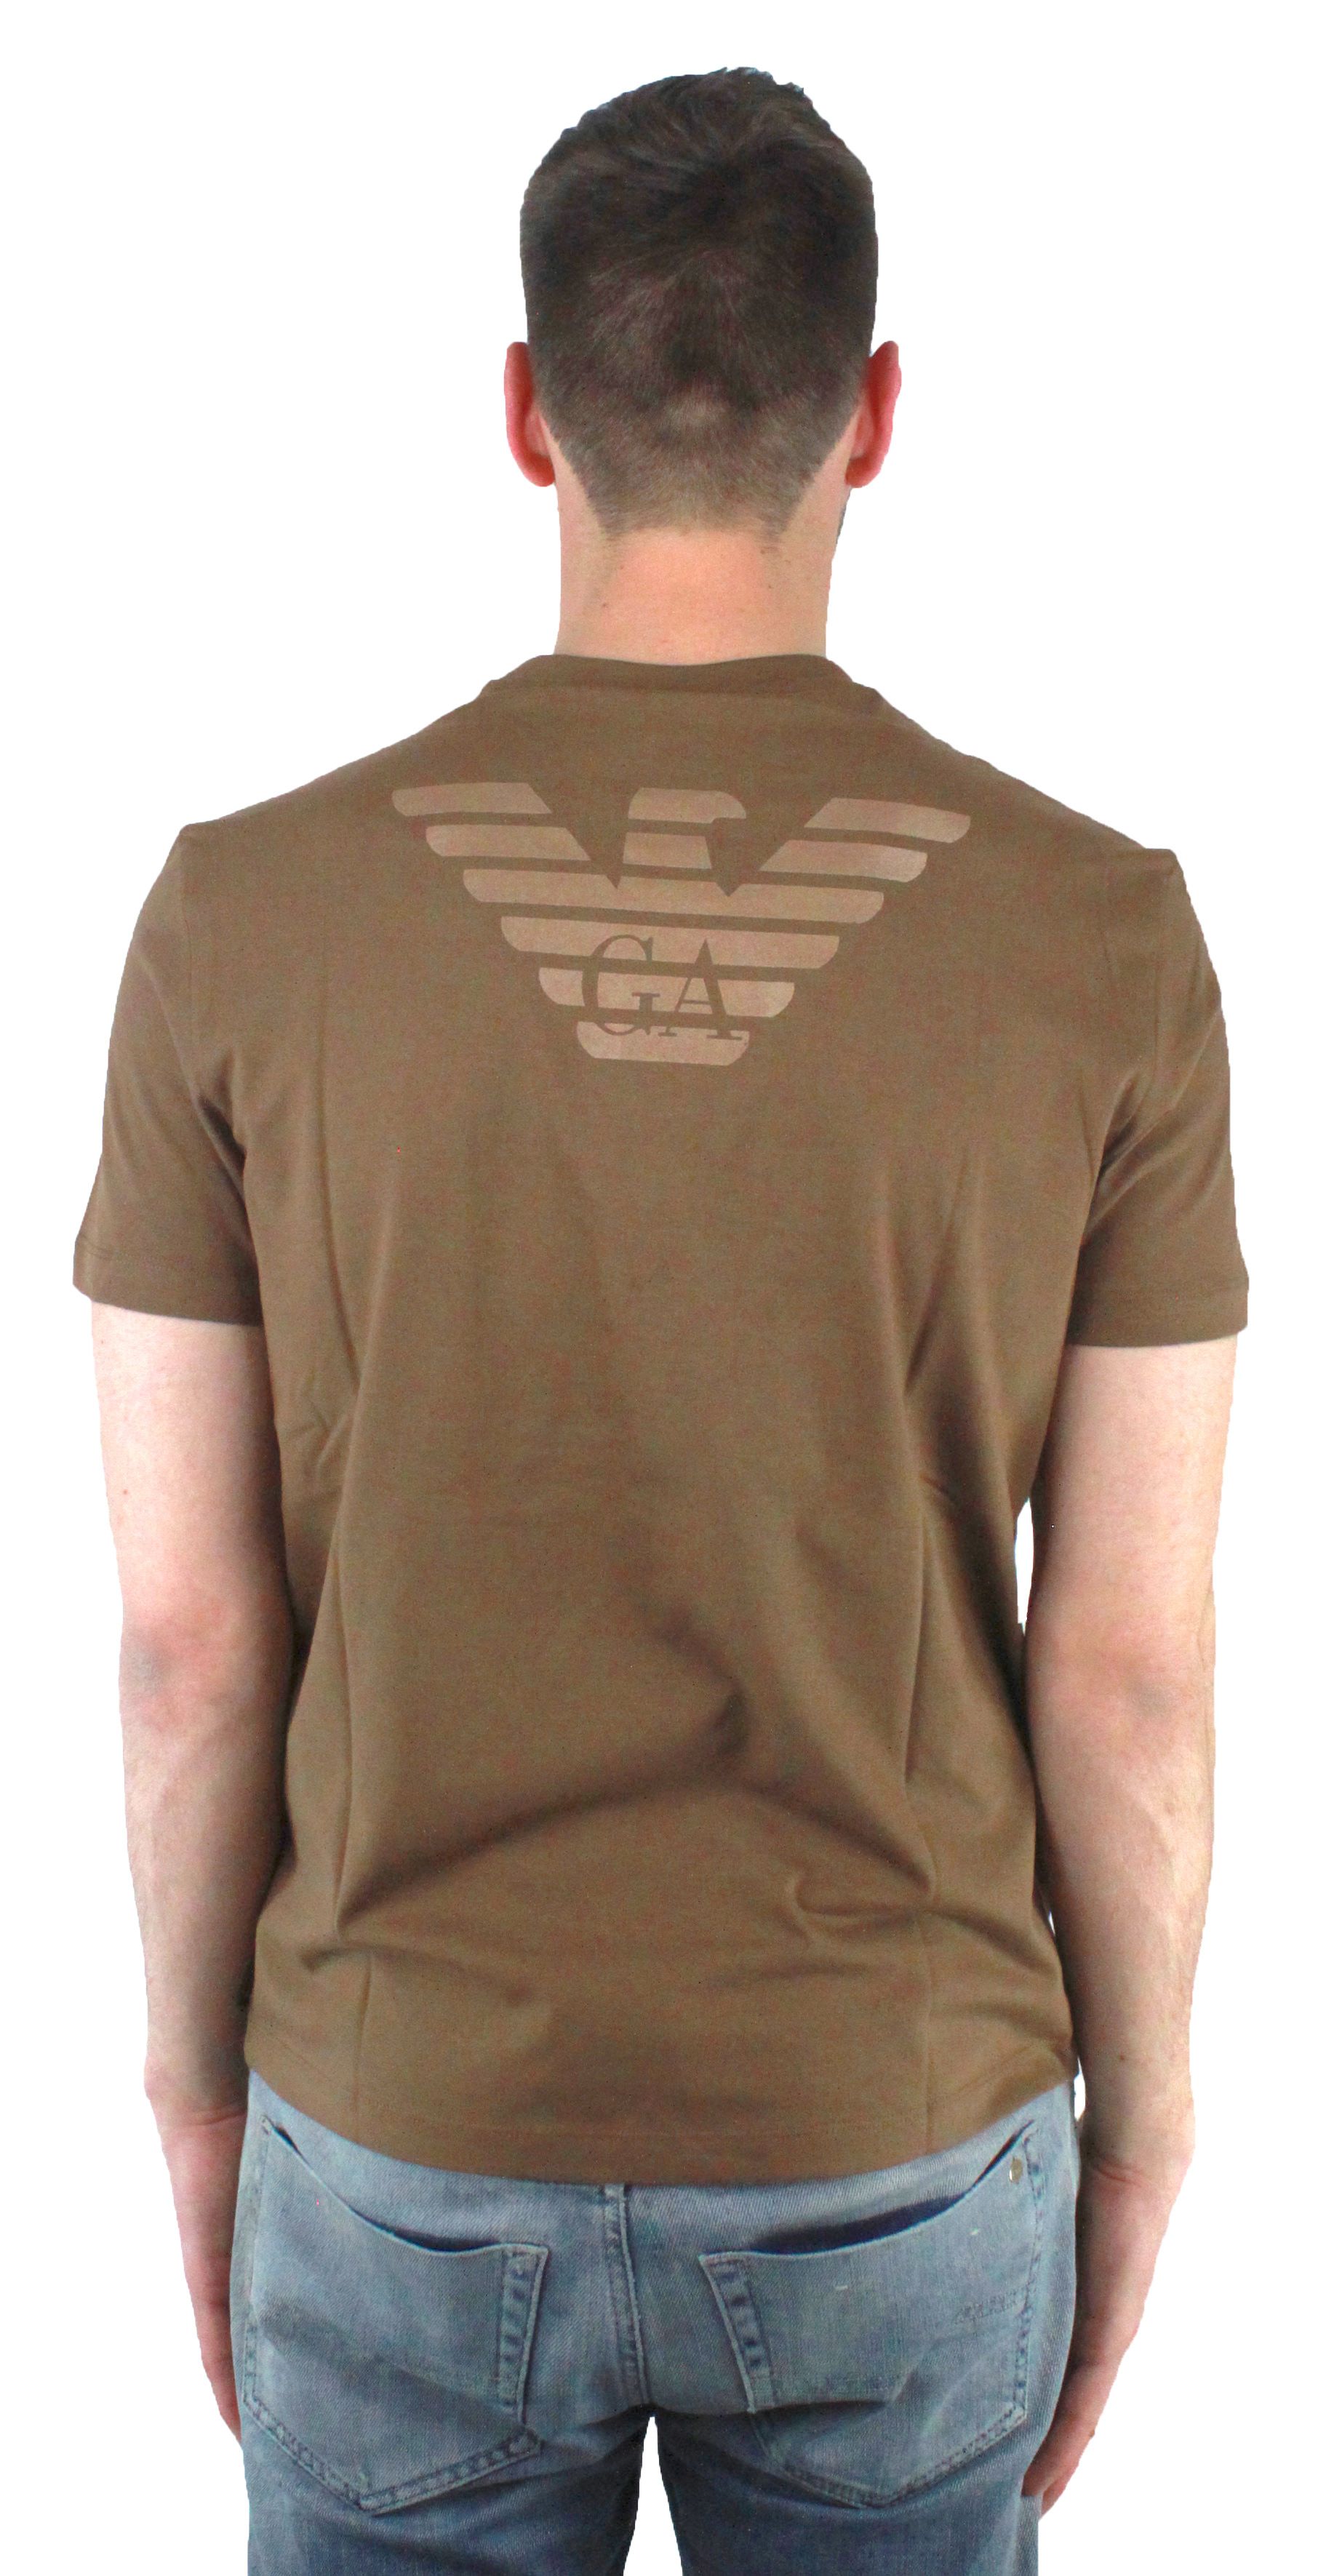 Emporio Armani 3Z1T88 1J00Z 0480 T-Shirt. Short Sleeved Brown T-Shirt. Armani Emblem to the Front Chest Area. 100% Cotton. Style: 3Z1T88 1J00Z. Crew Neck